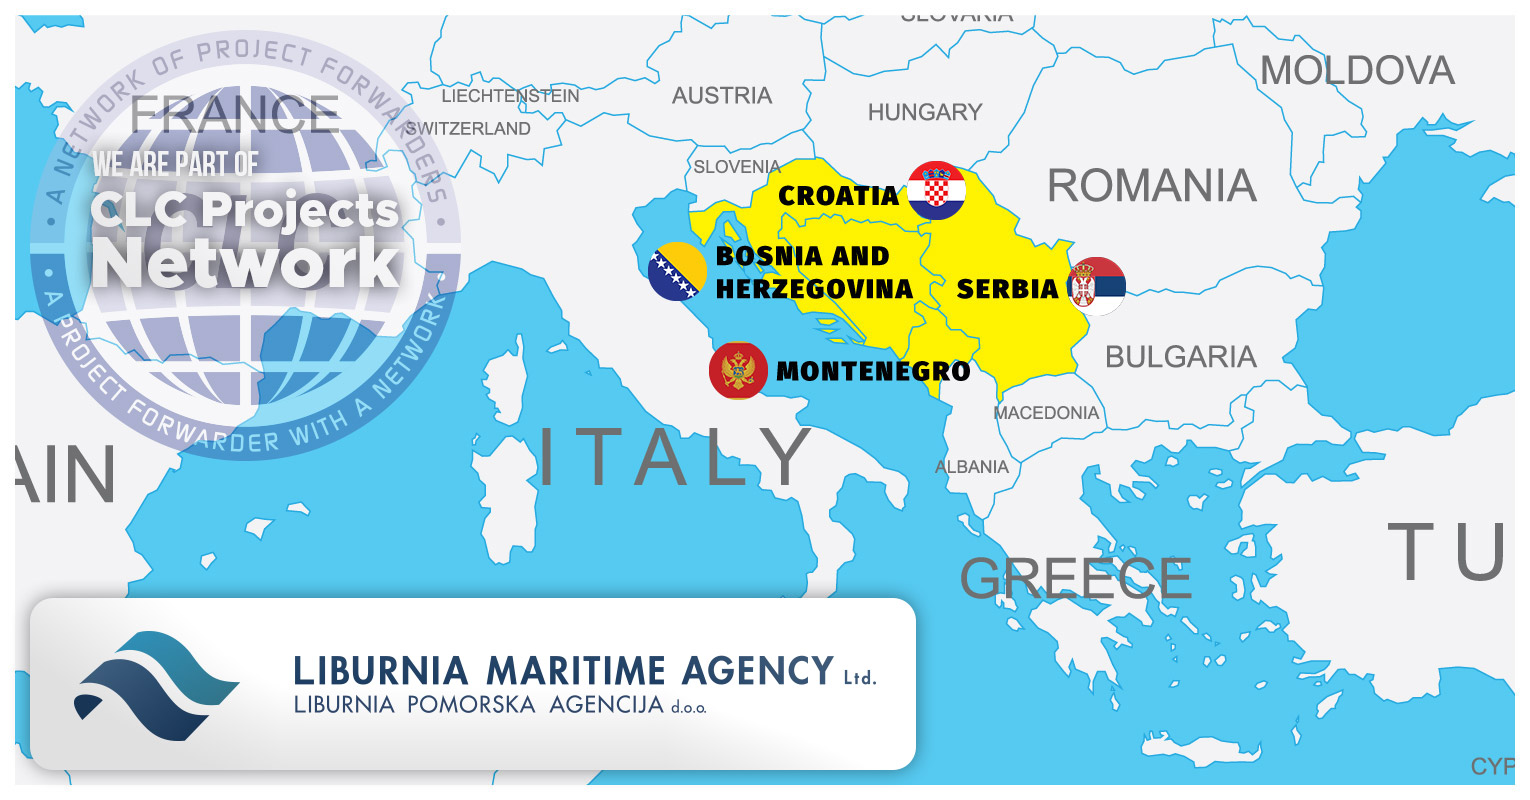 New Member Representing Bosnia and Herzegovina, Croatia, Montenegro and Serbia – Liburnia Maritime Agency Ltd